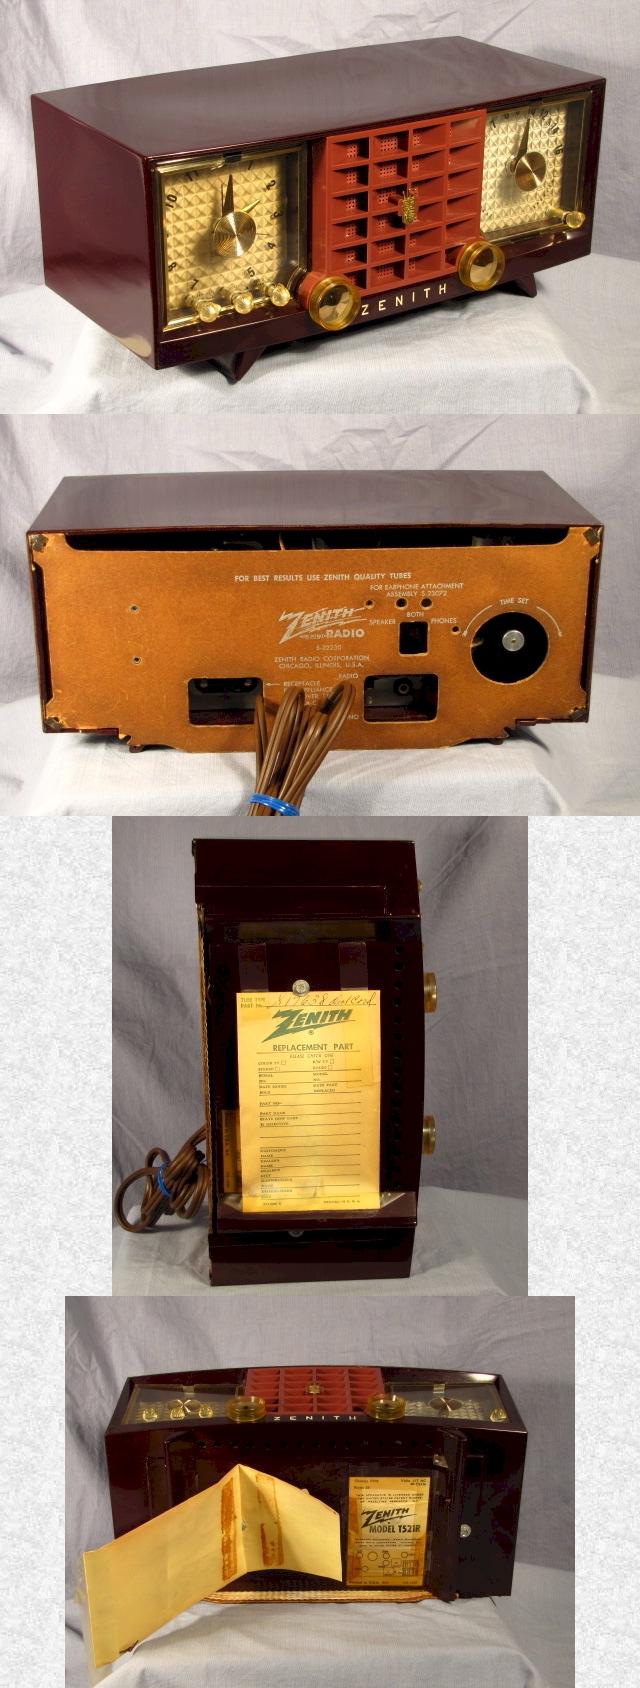 Zenith T521R Clock Radio (1956)